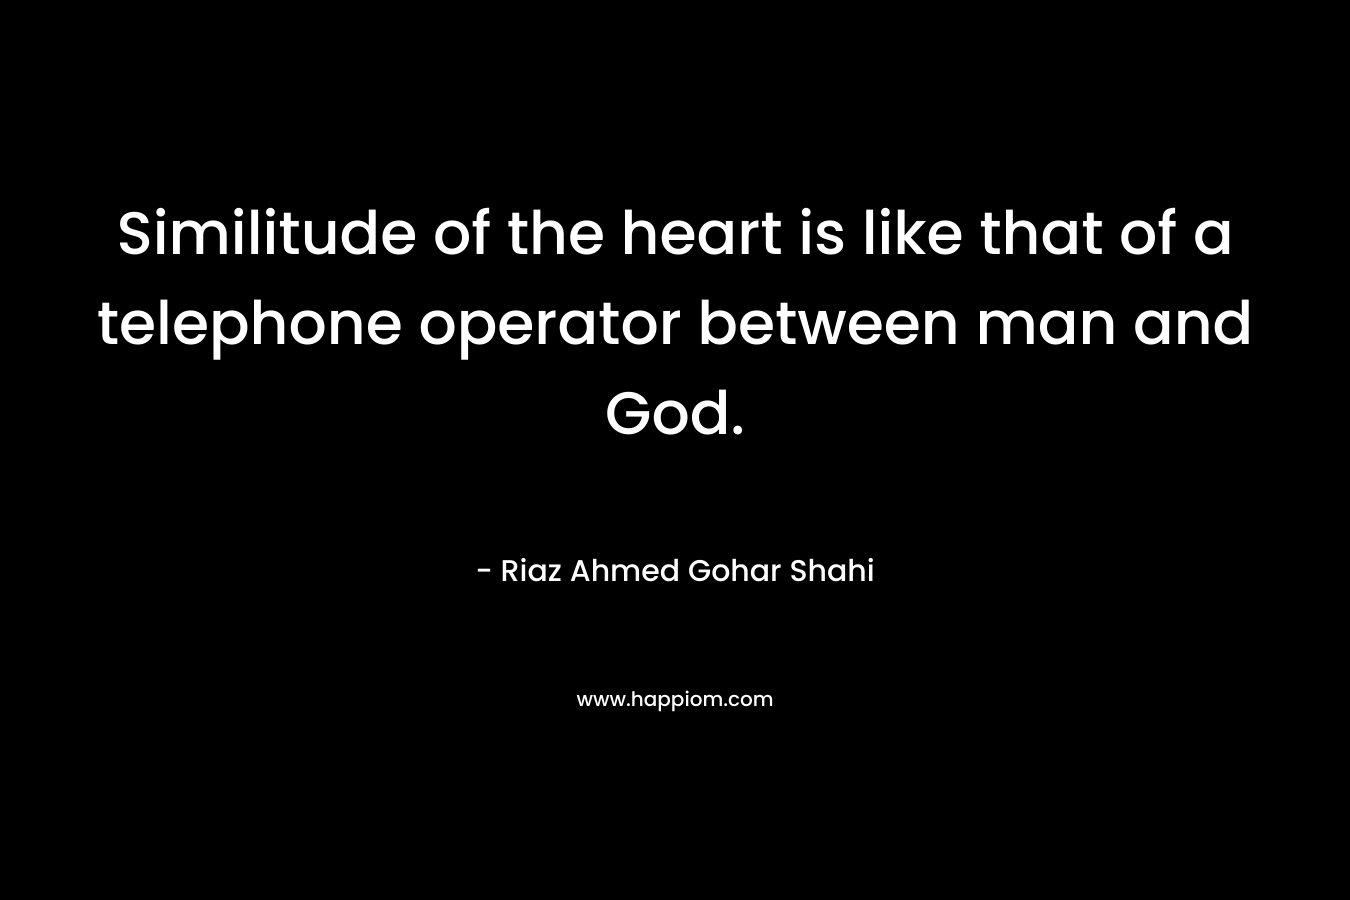 Similitude of the heart is like that of a telephone operator between man and God. – Riaz Ahmed Gohar Shahi